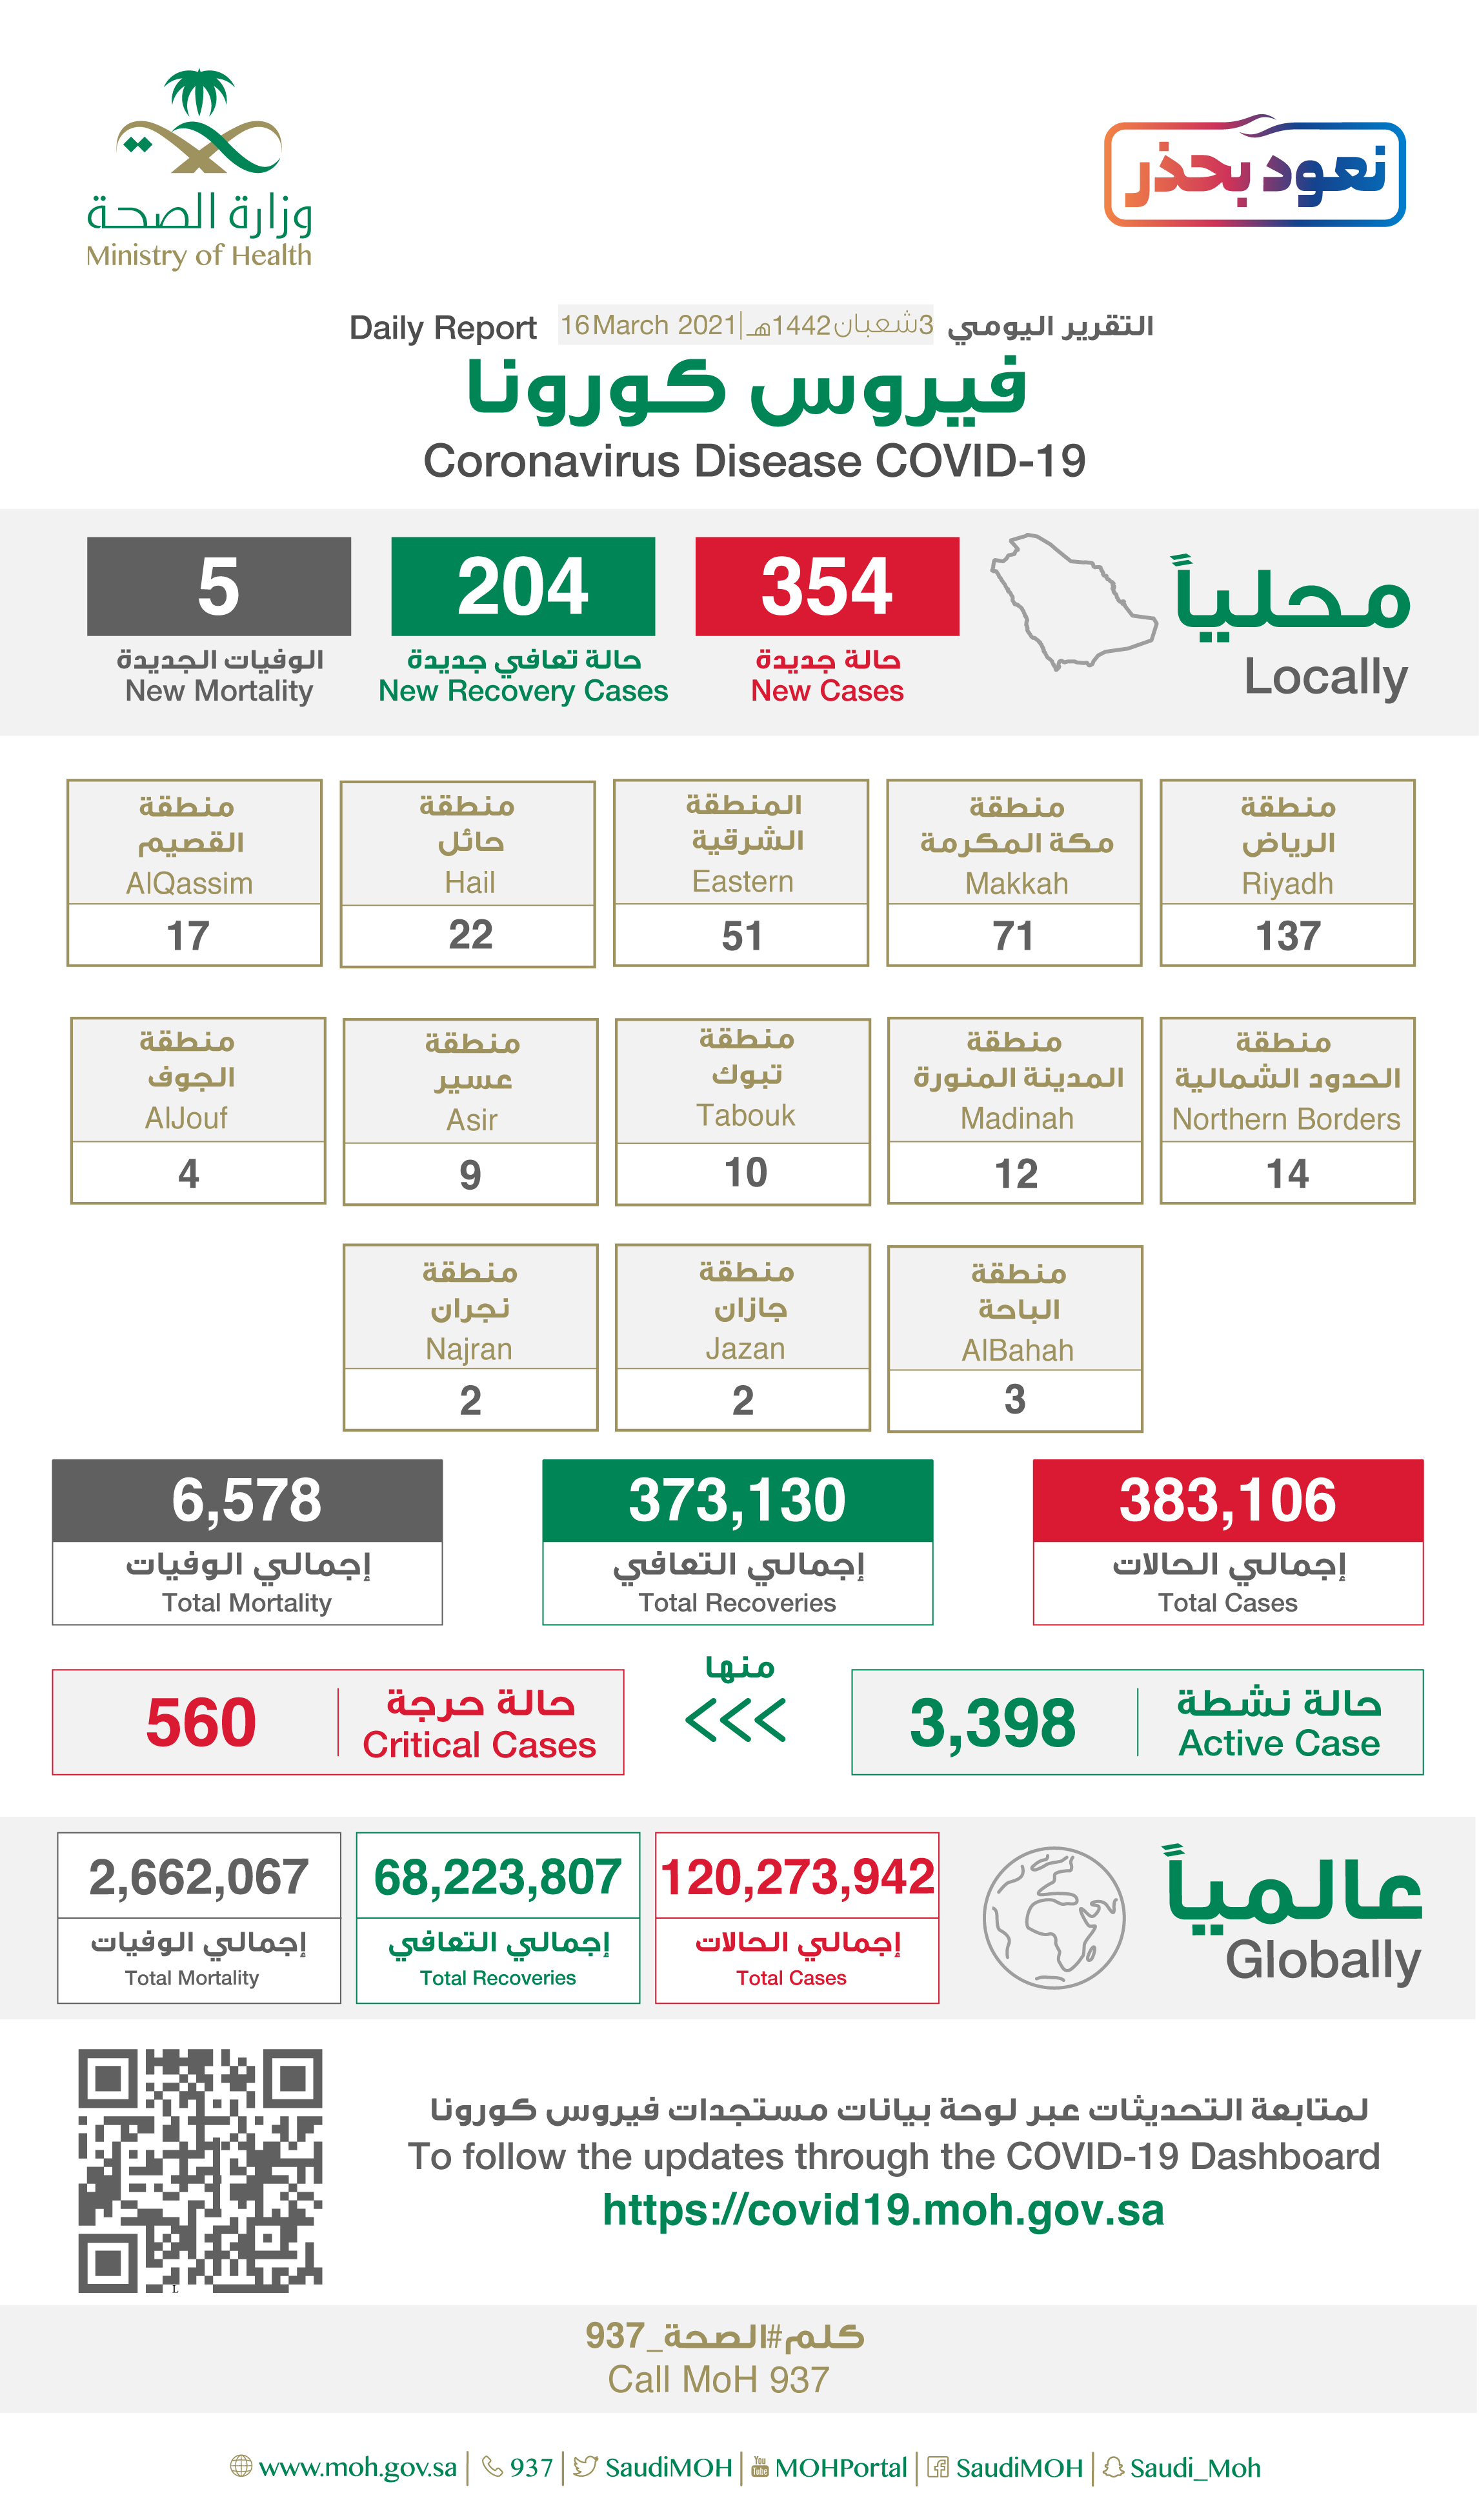 Saudi Arabia Coronavirus : Total Cases :383,106 , New Cases : 354, Cured : 373,130 , Deaths: 6,578, Active Cases : 3,398